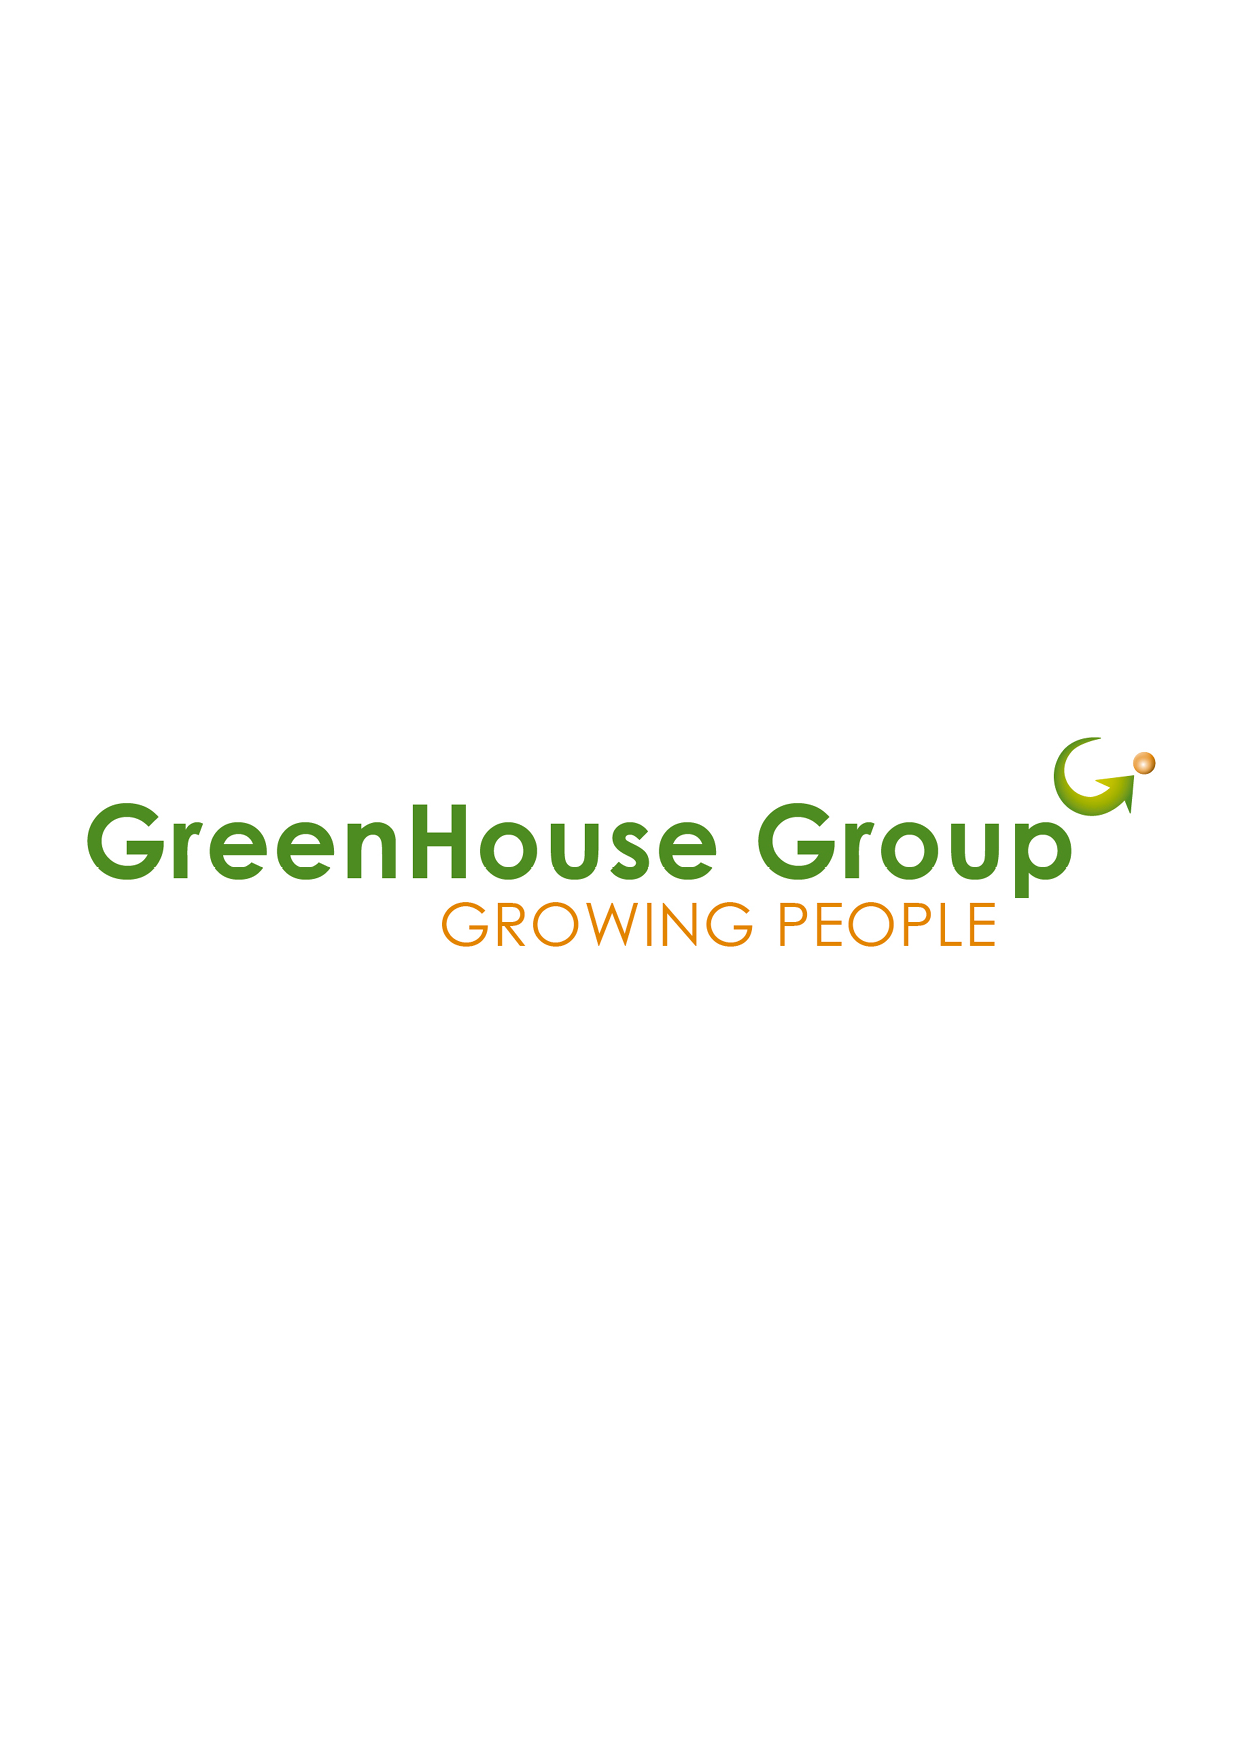 The GreenHouse Group bvba